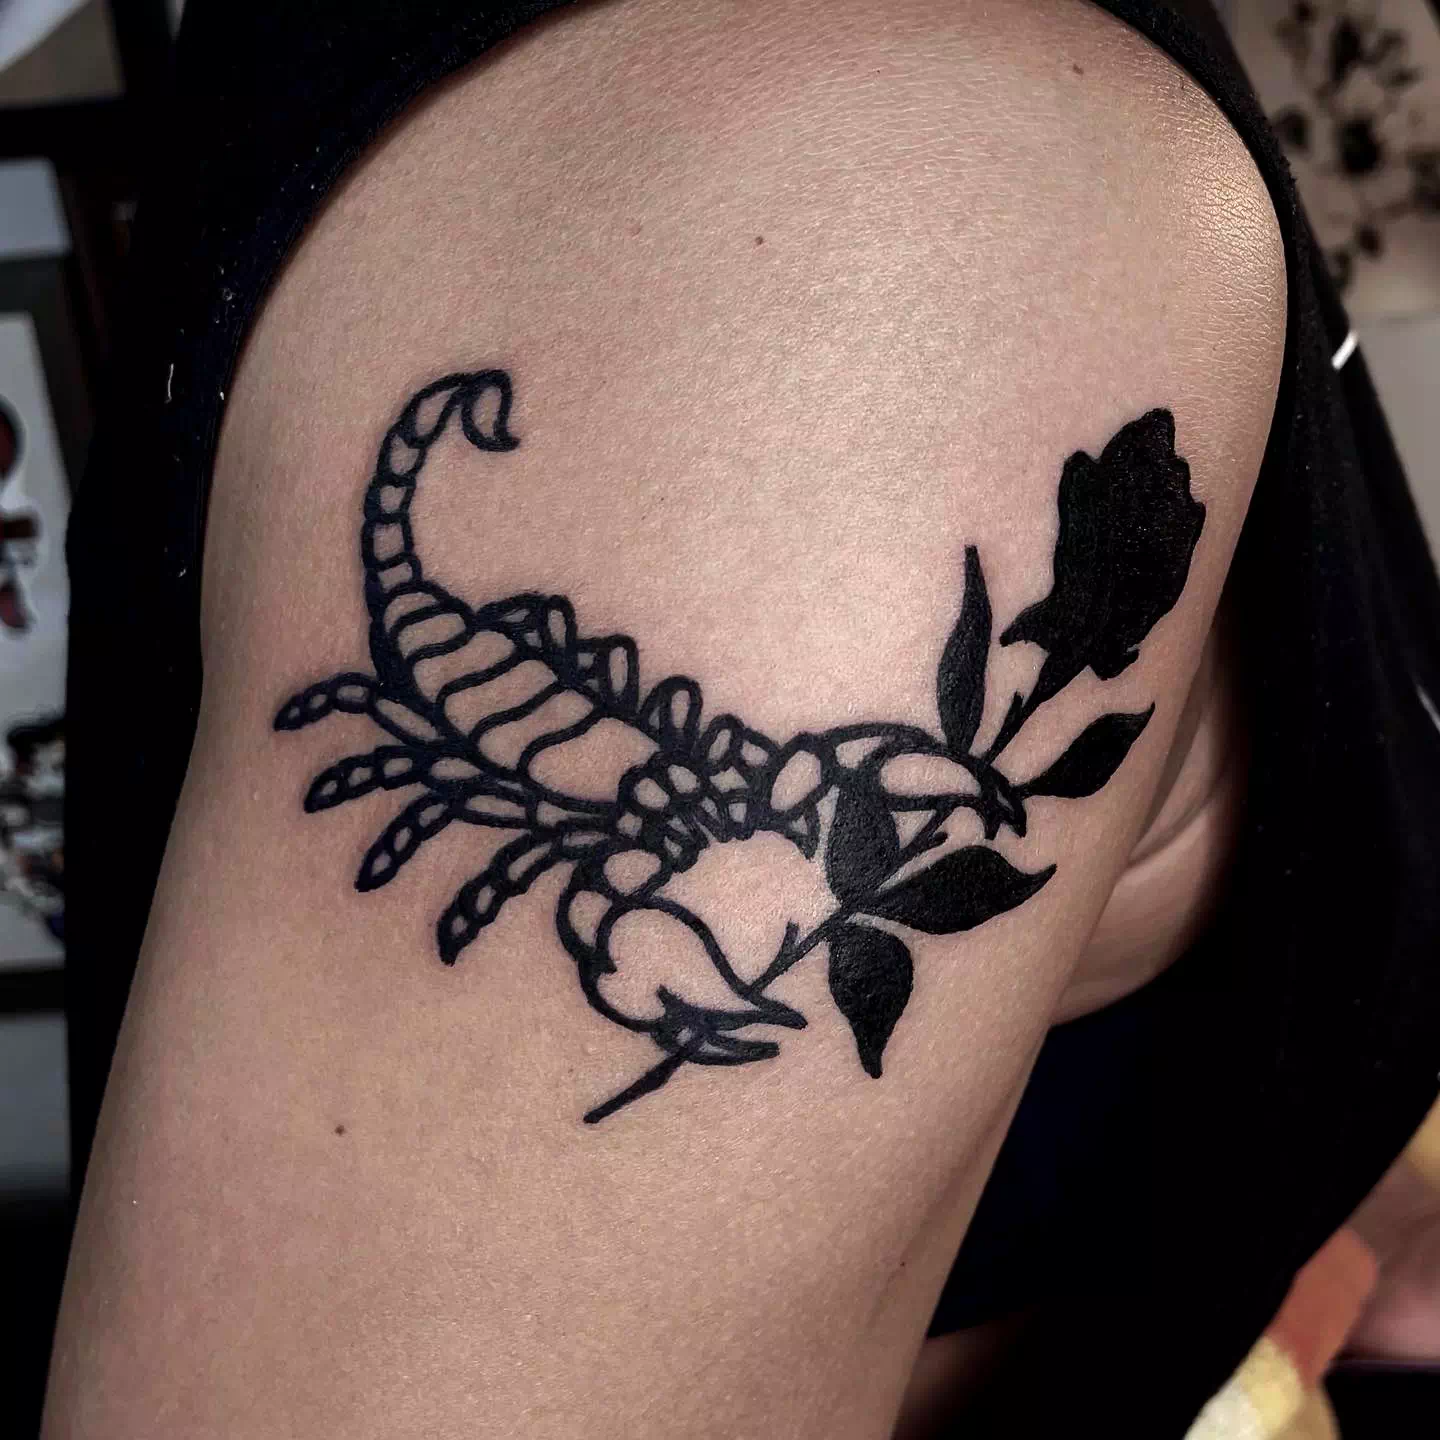 Feminine Scorpio Tattoos With A Rose Print 4